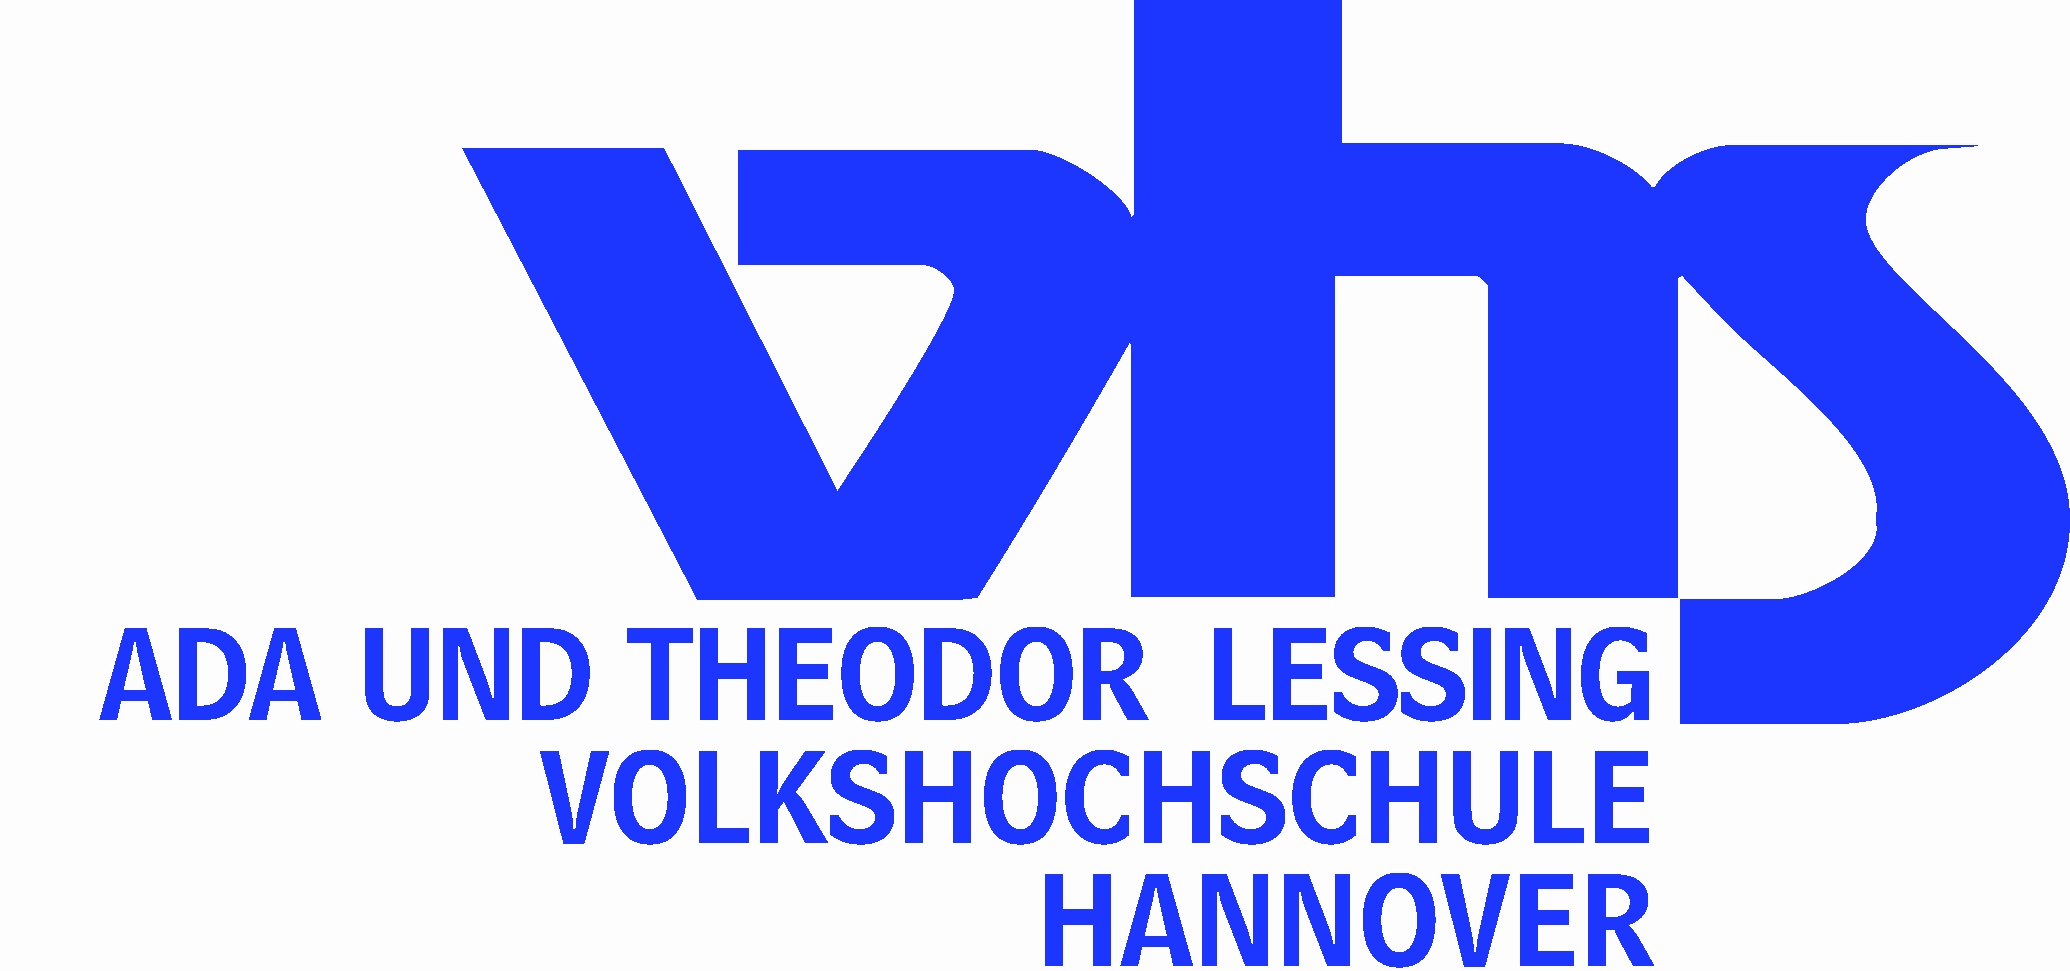 VHS - Ada und Theordor Lessing Volkshochschule Hannover